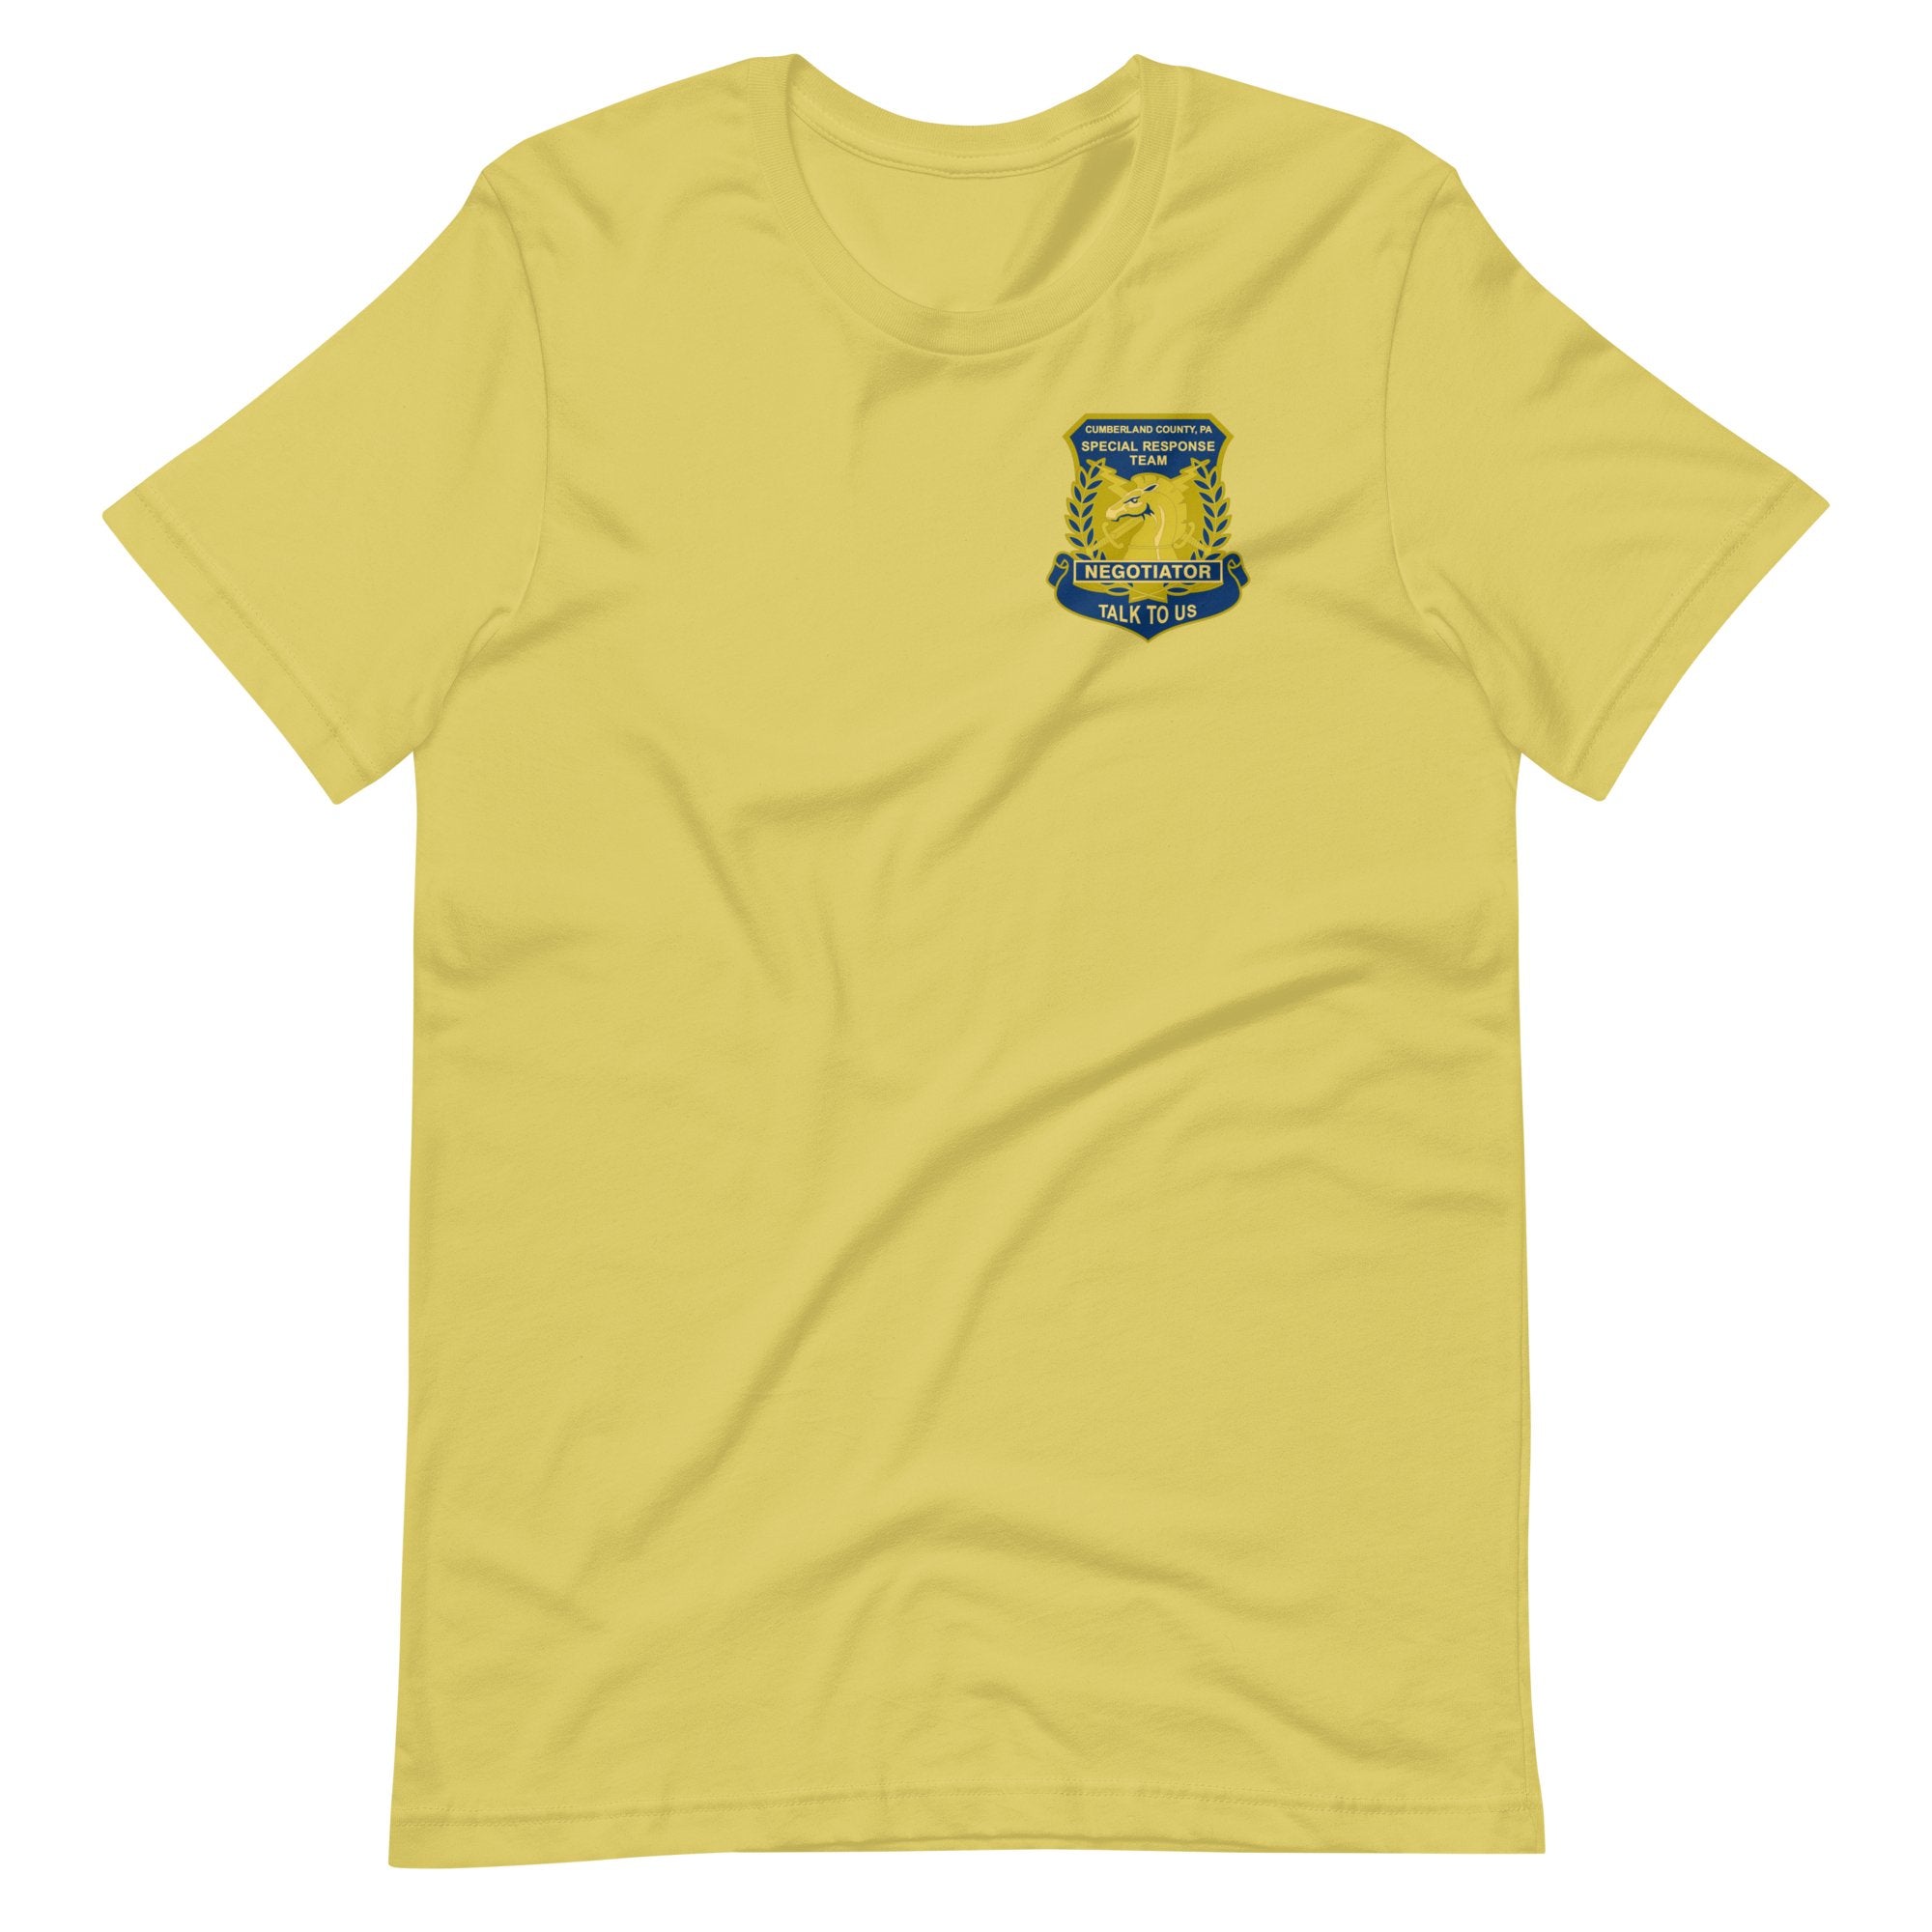 CCSRT - Negotiator Shirt - Blue and Yellow Print - SOARescue